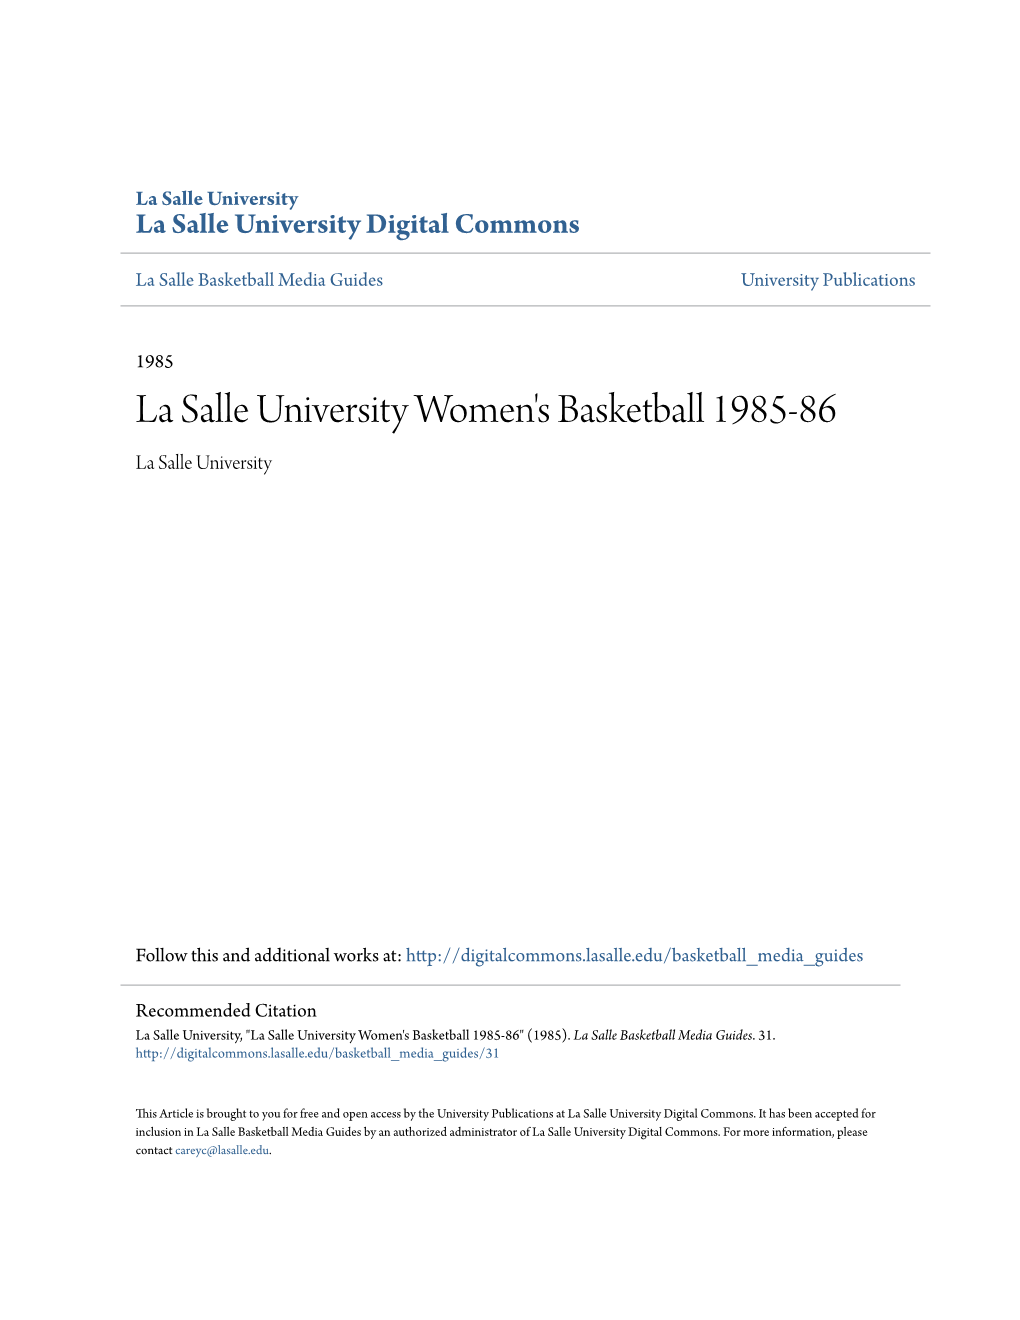 La Salle University Women's Basketball 1985-86 La Salle University